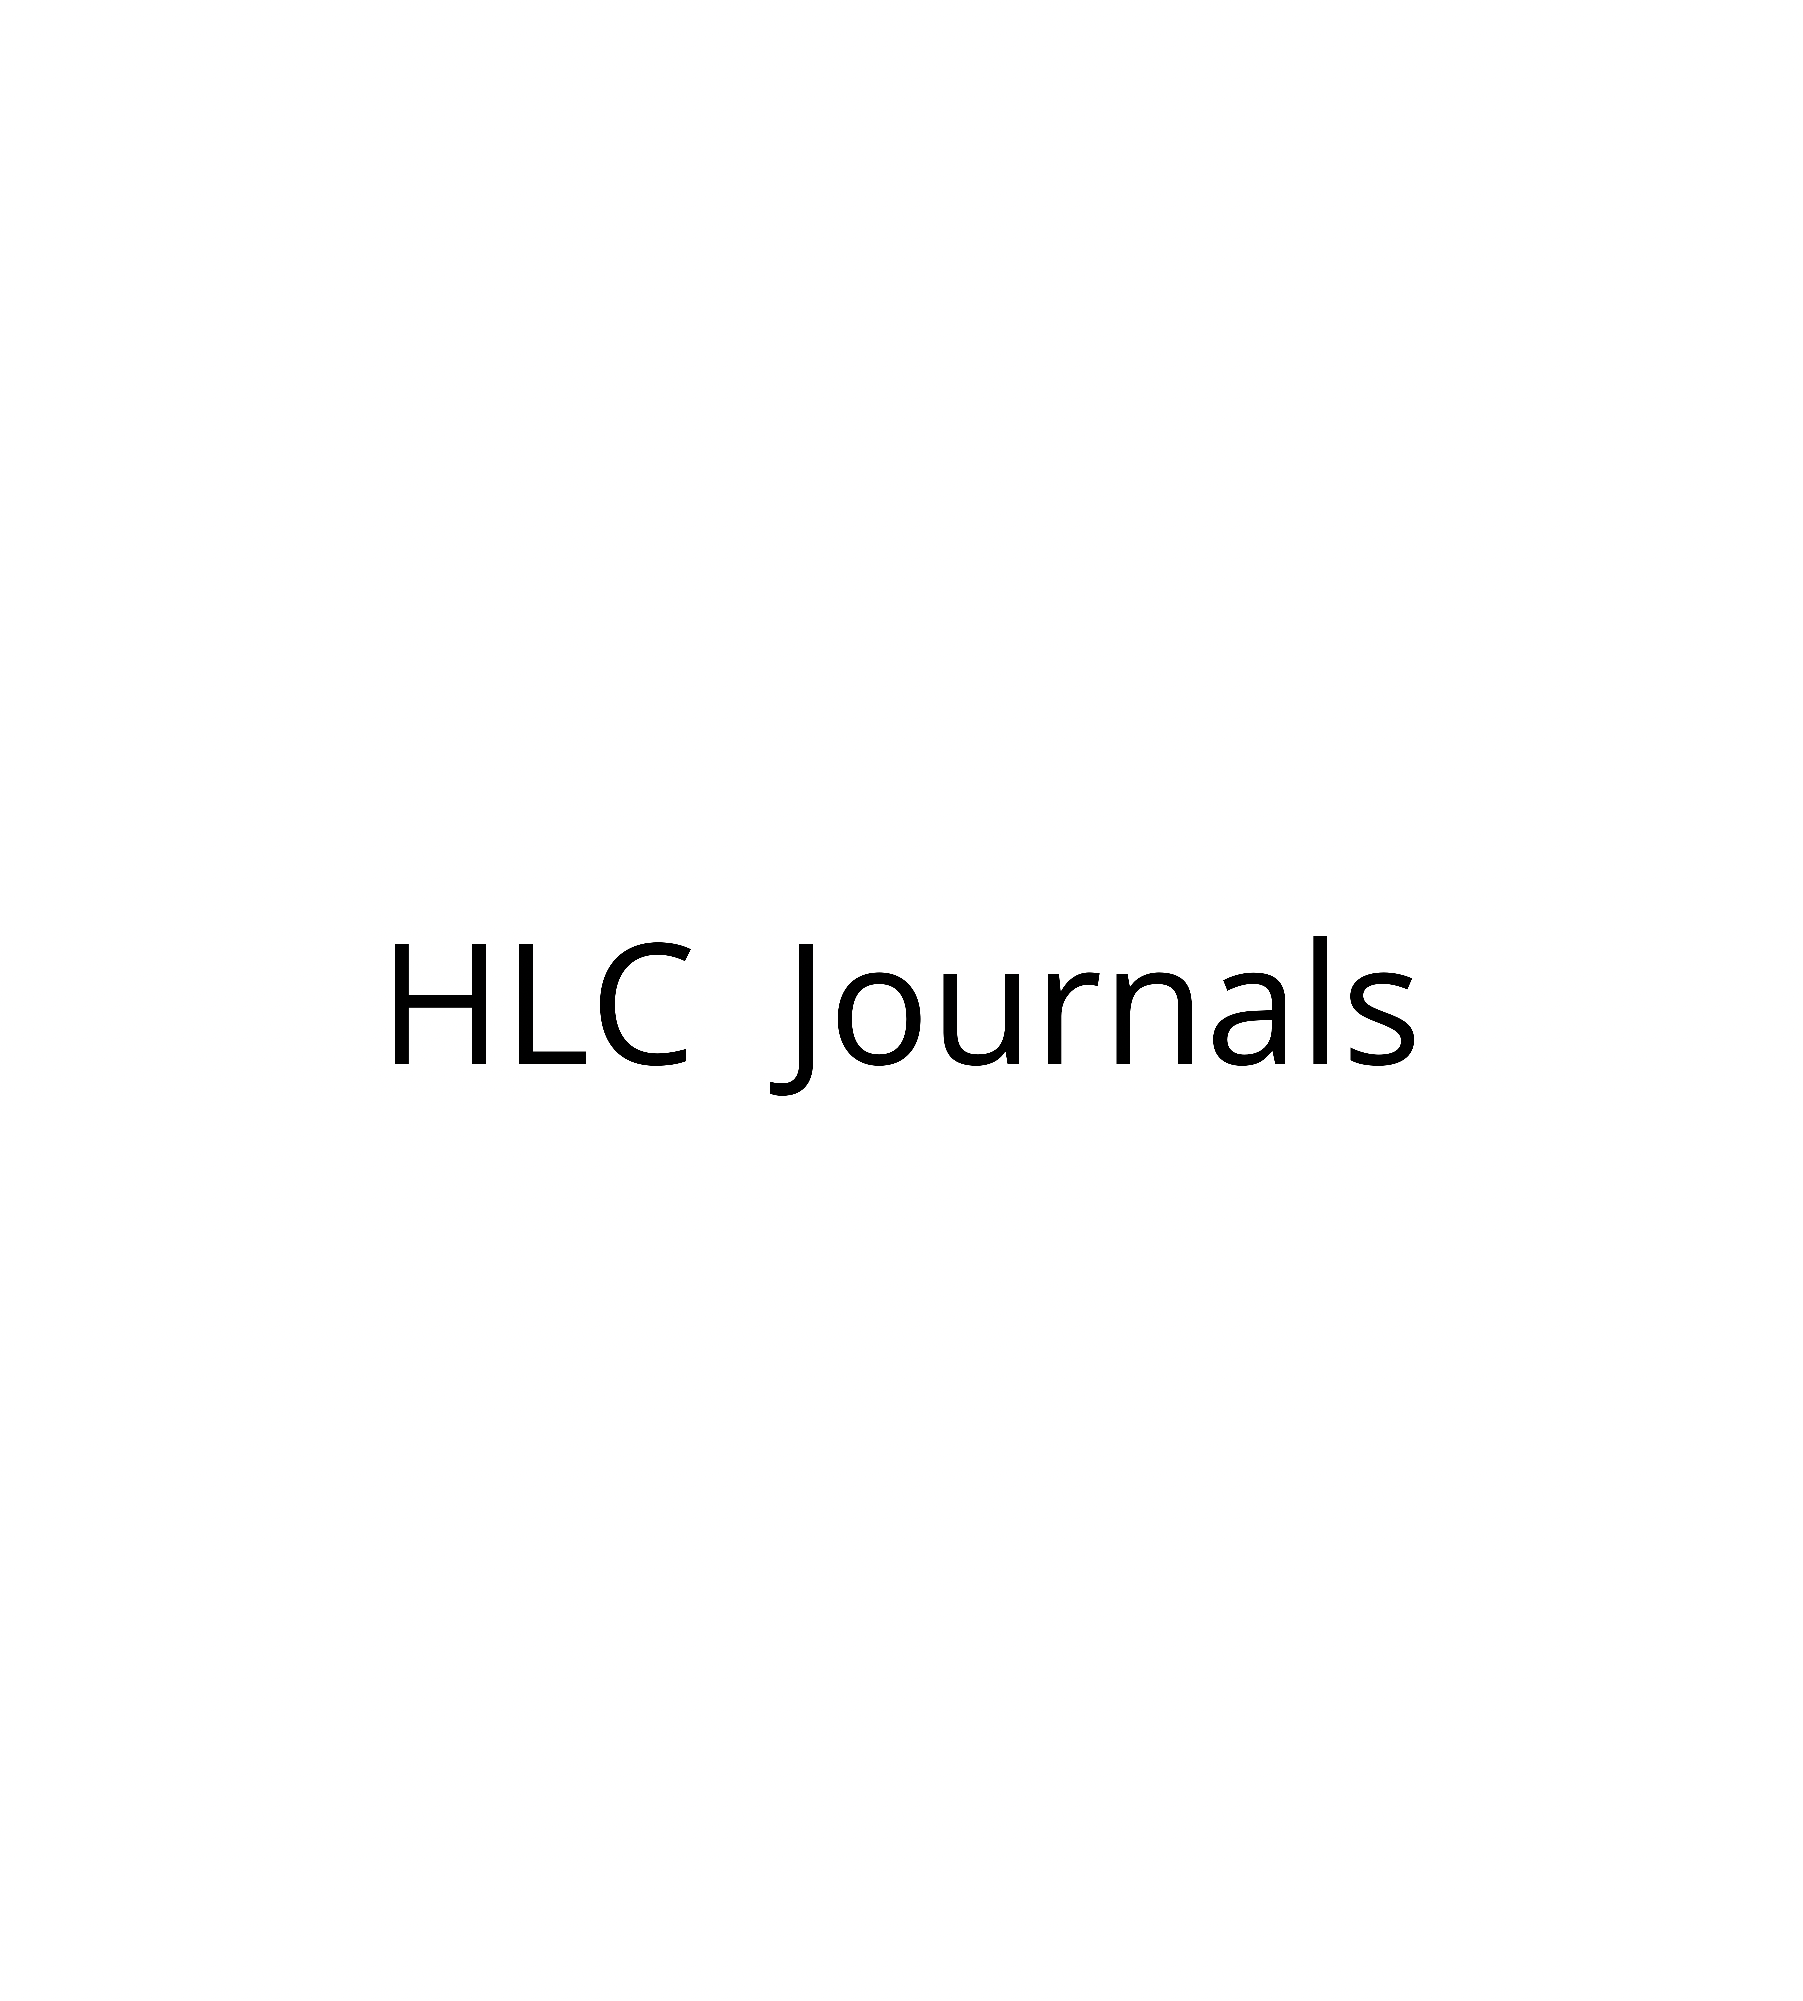 https://www.thebrewshow.net/wp-content/uploads/2021/08/HLC-Journals-.png